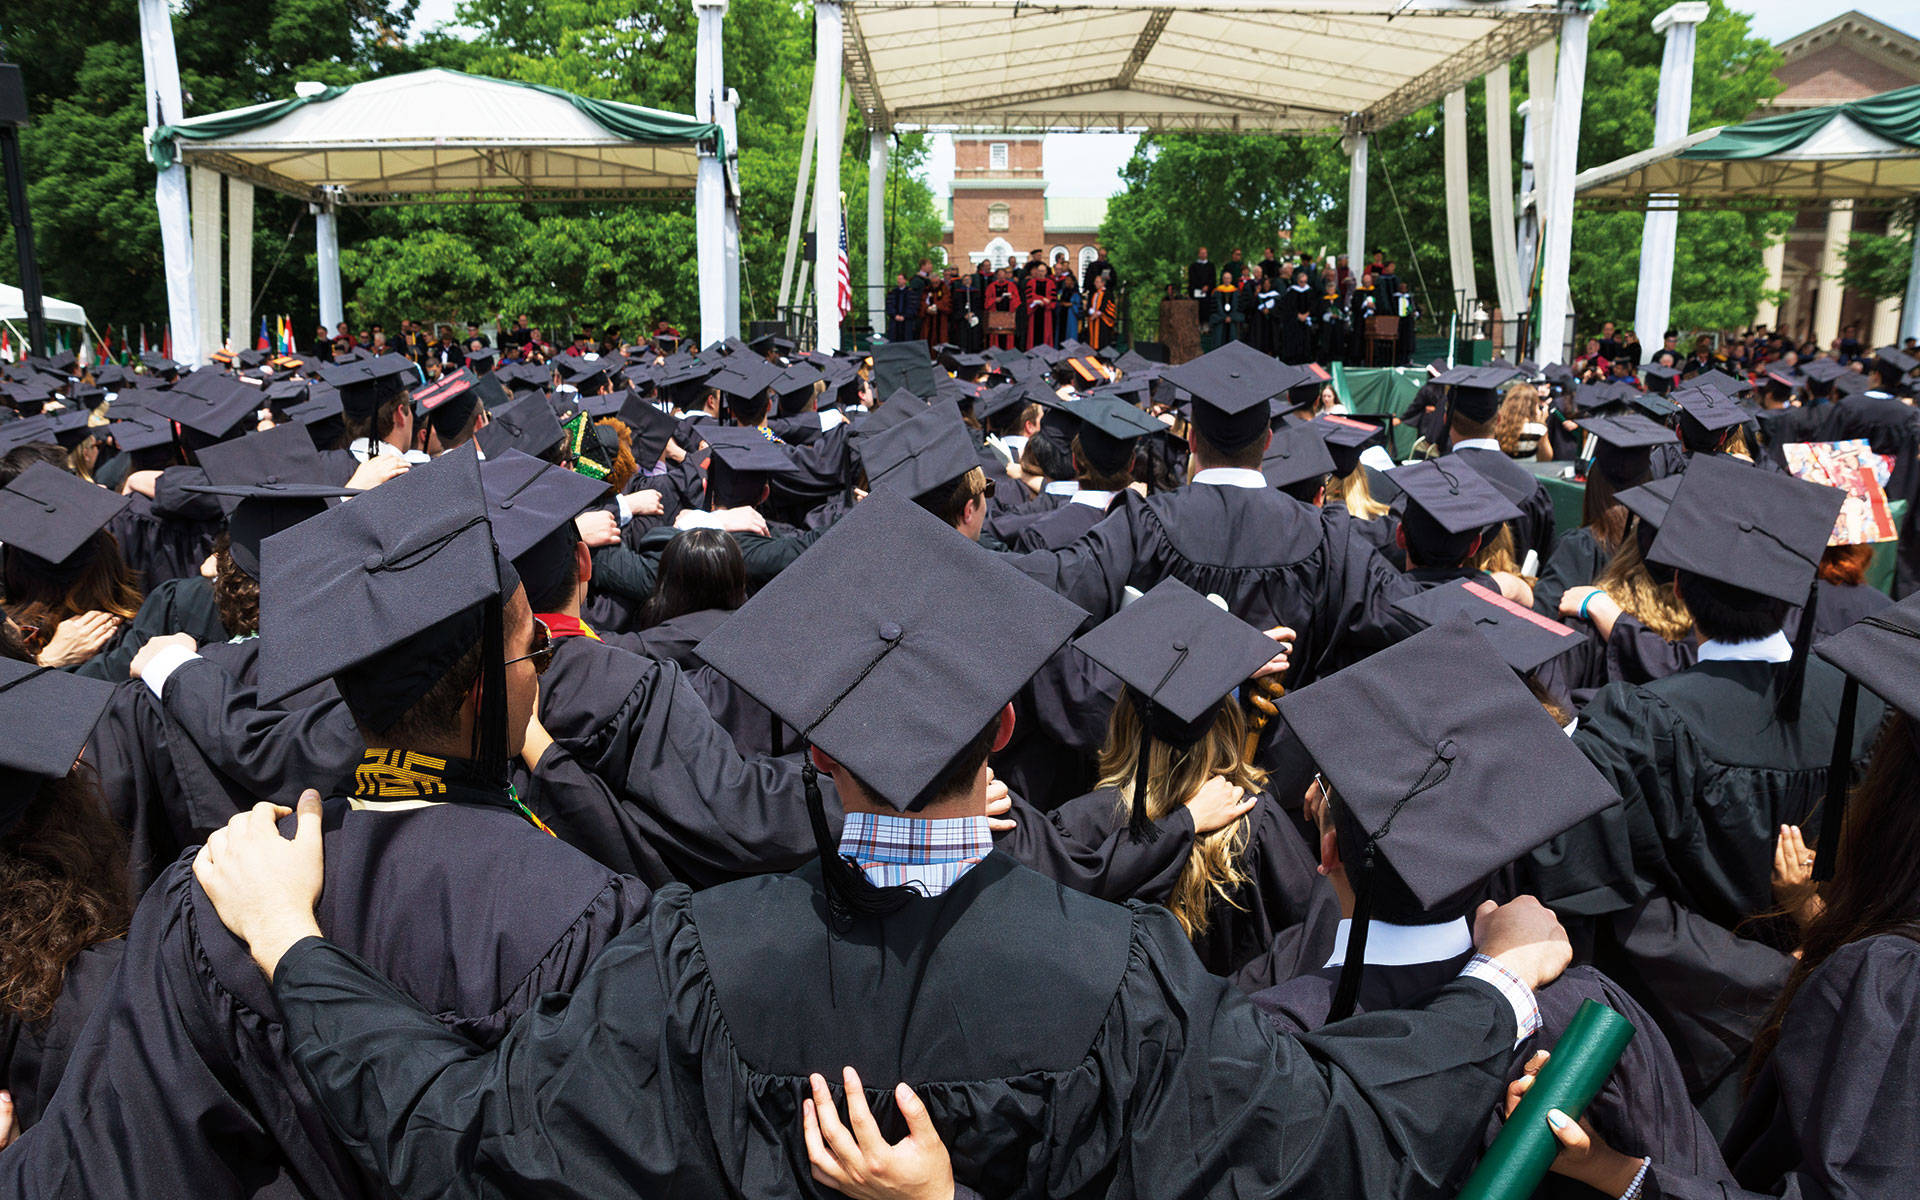 Download Dartmouth College Graduation Ceremony Wallpaper